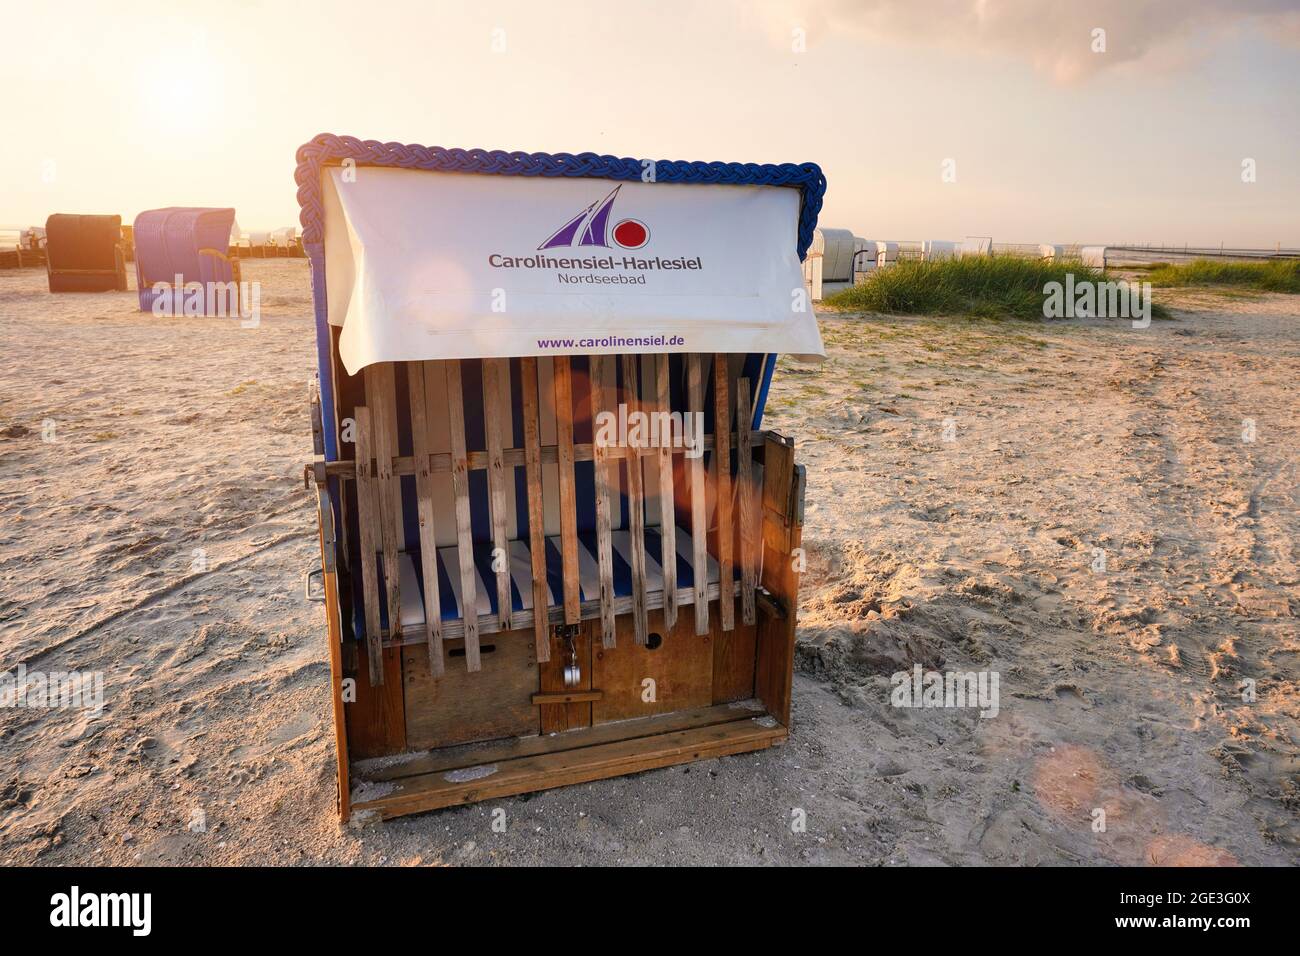 Typical beach chair, called Strandkorb, on the beach. North Sea resort Carolinensiel-Harlesiel in East Frisia, Lower Saxony, Germany. Stock Photo